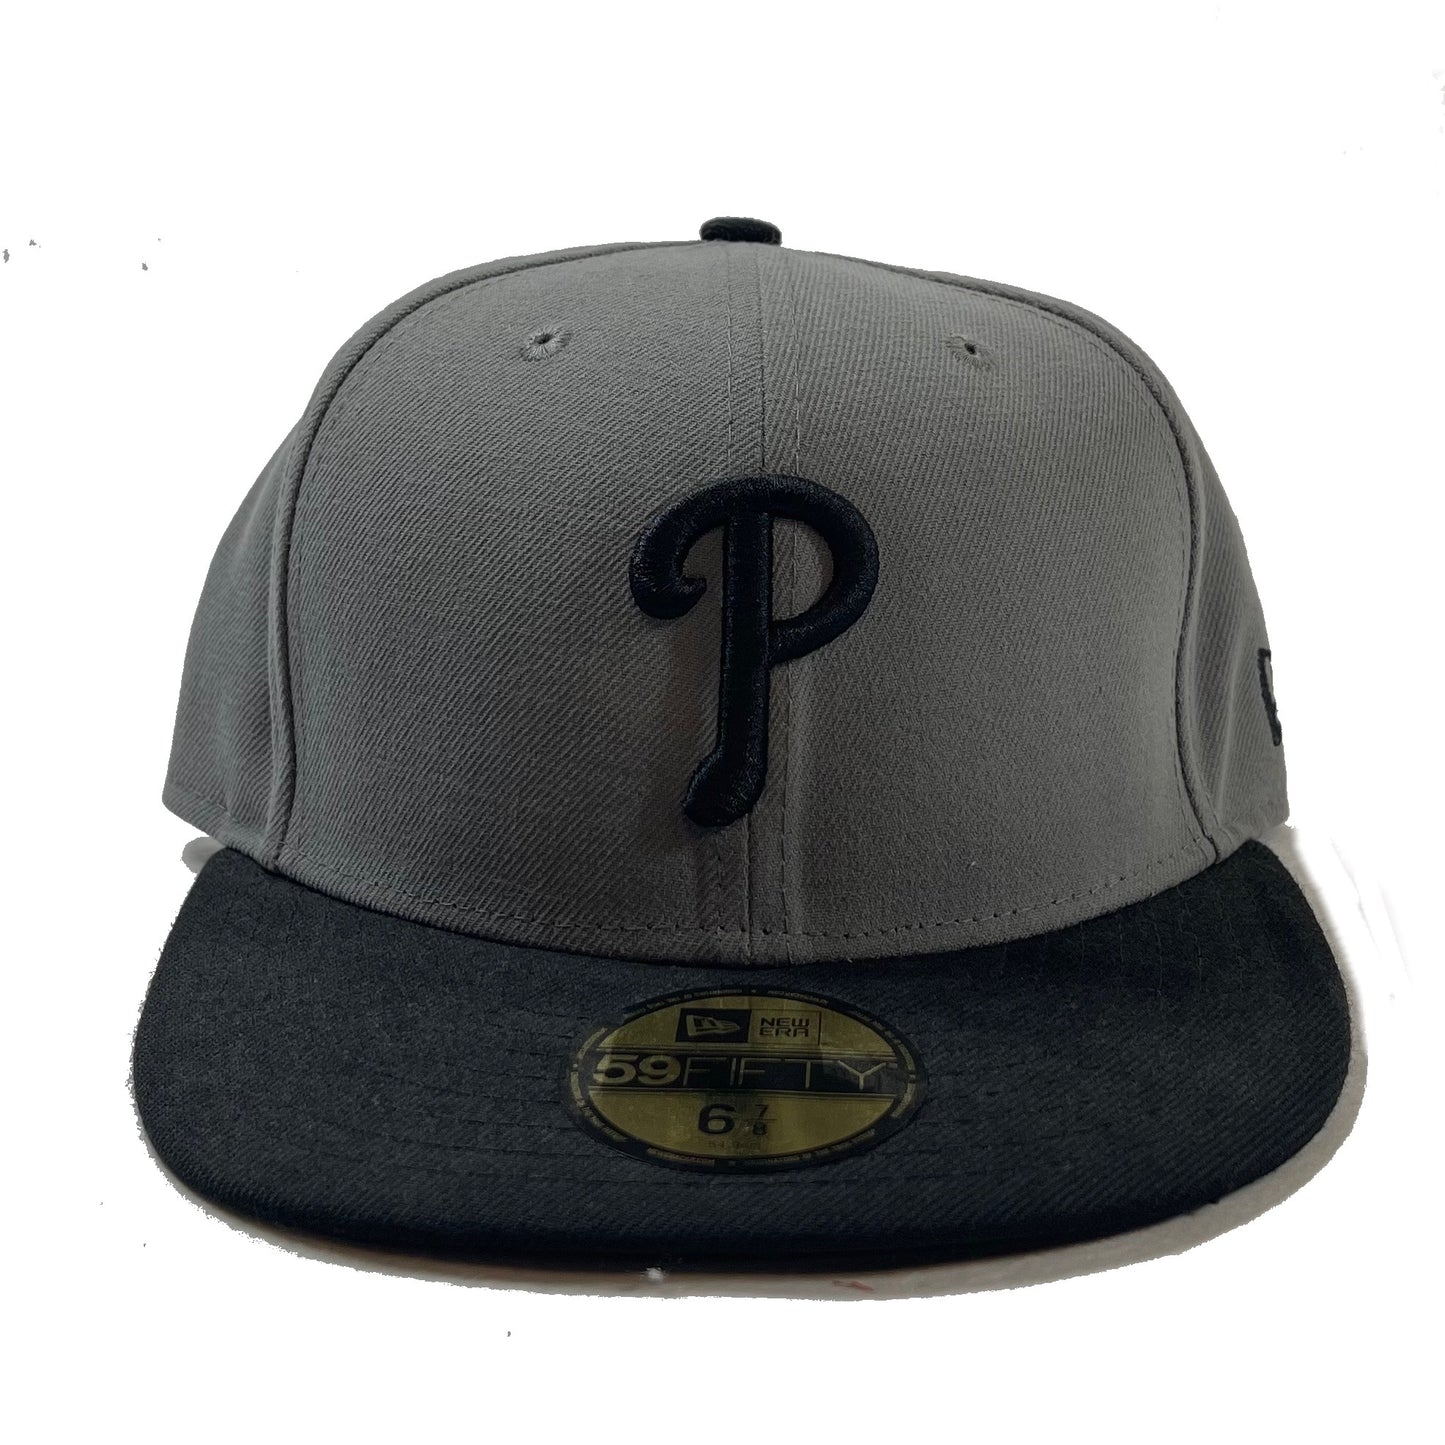 Philadelphia Phillies (Dark Grey) Fitted